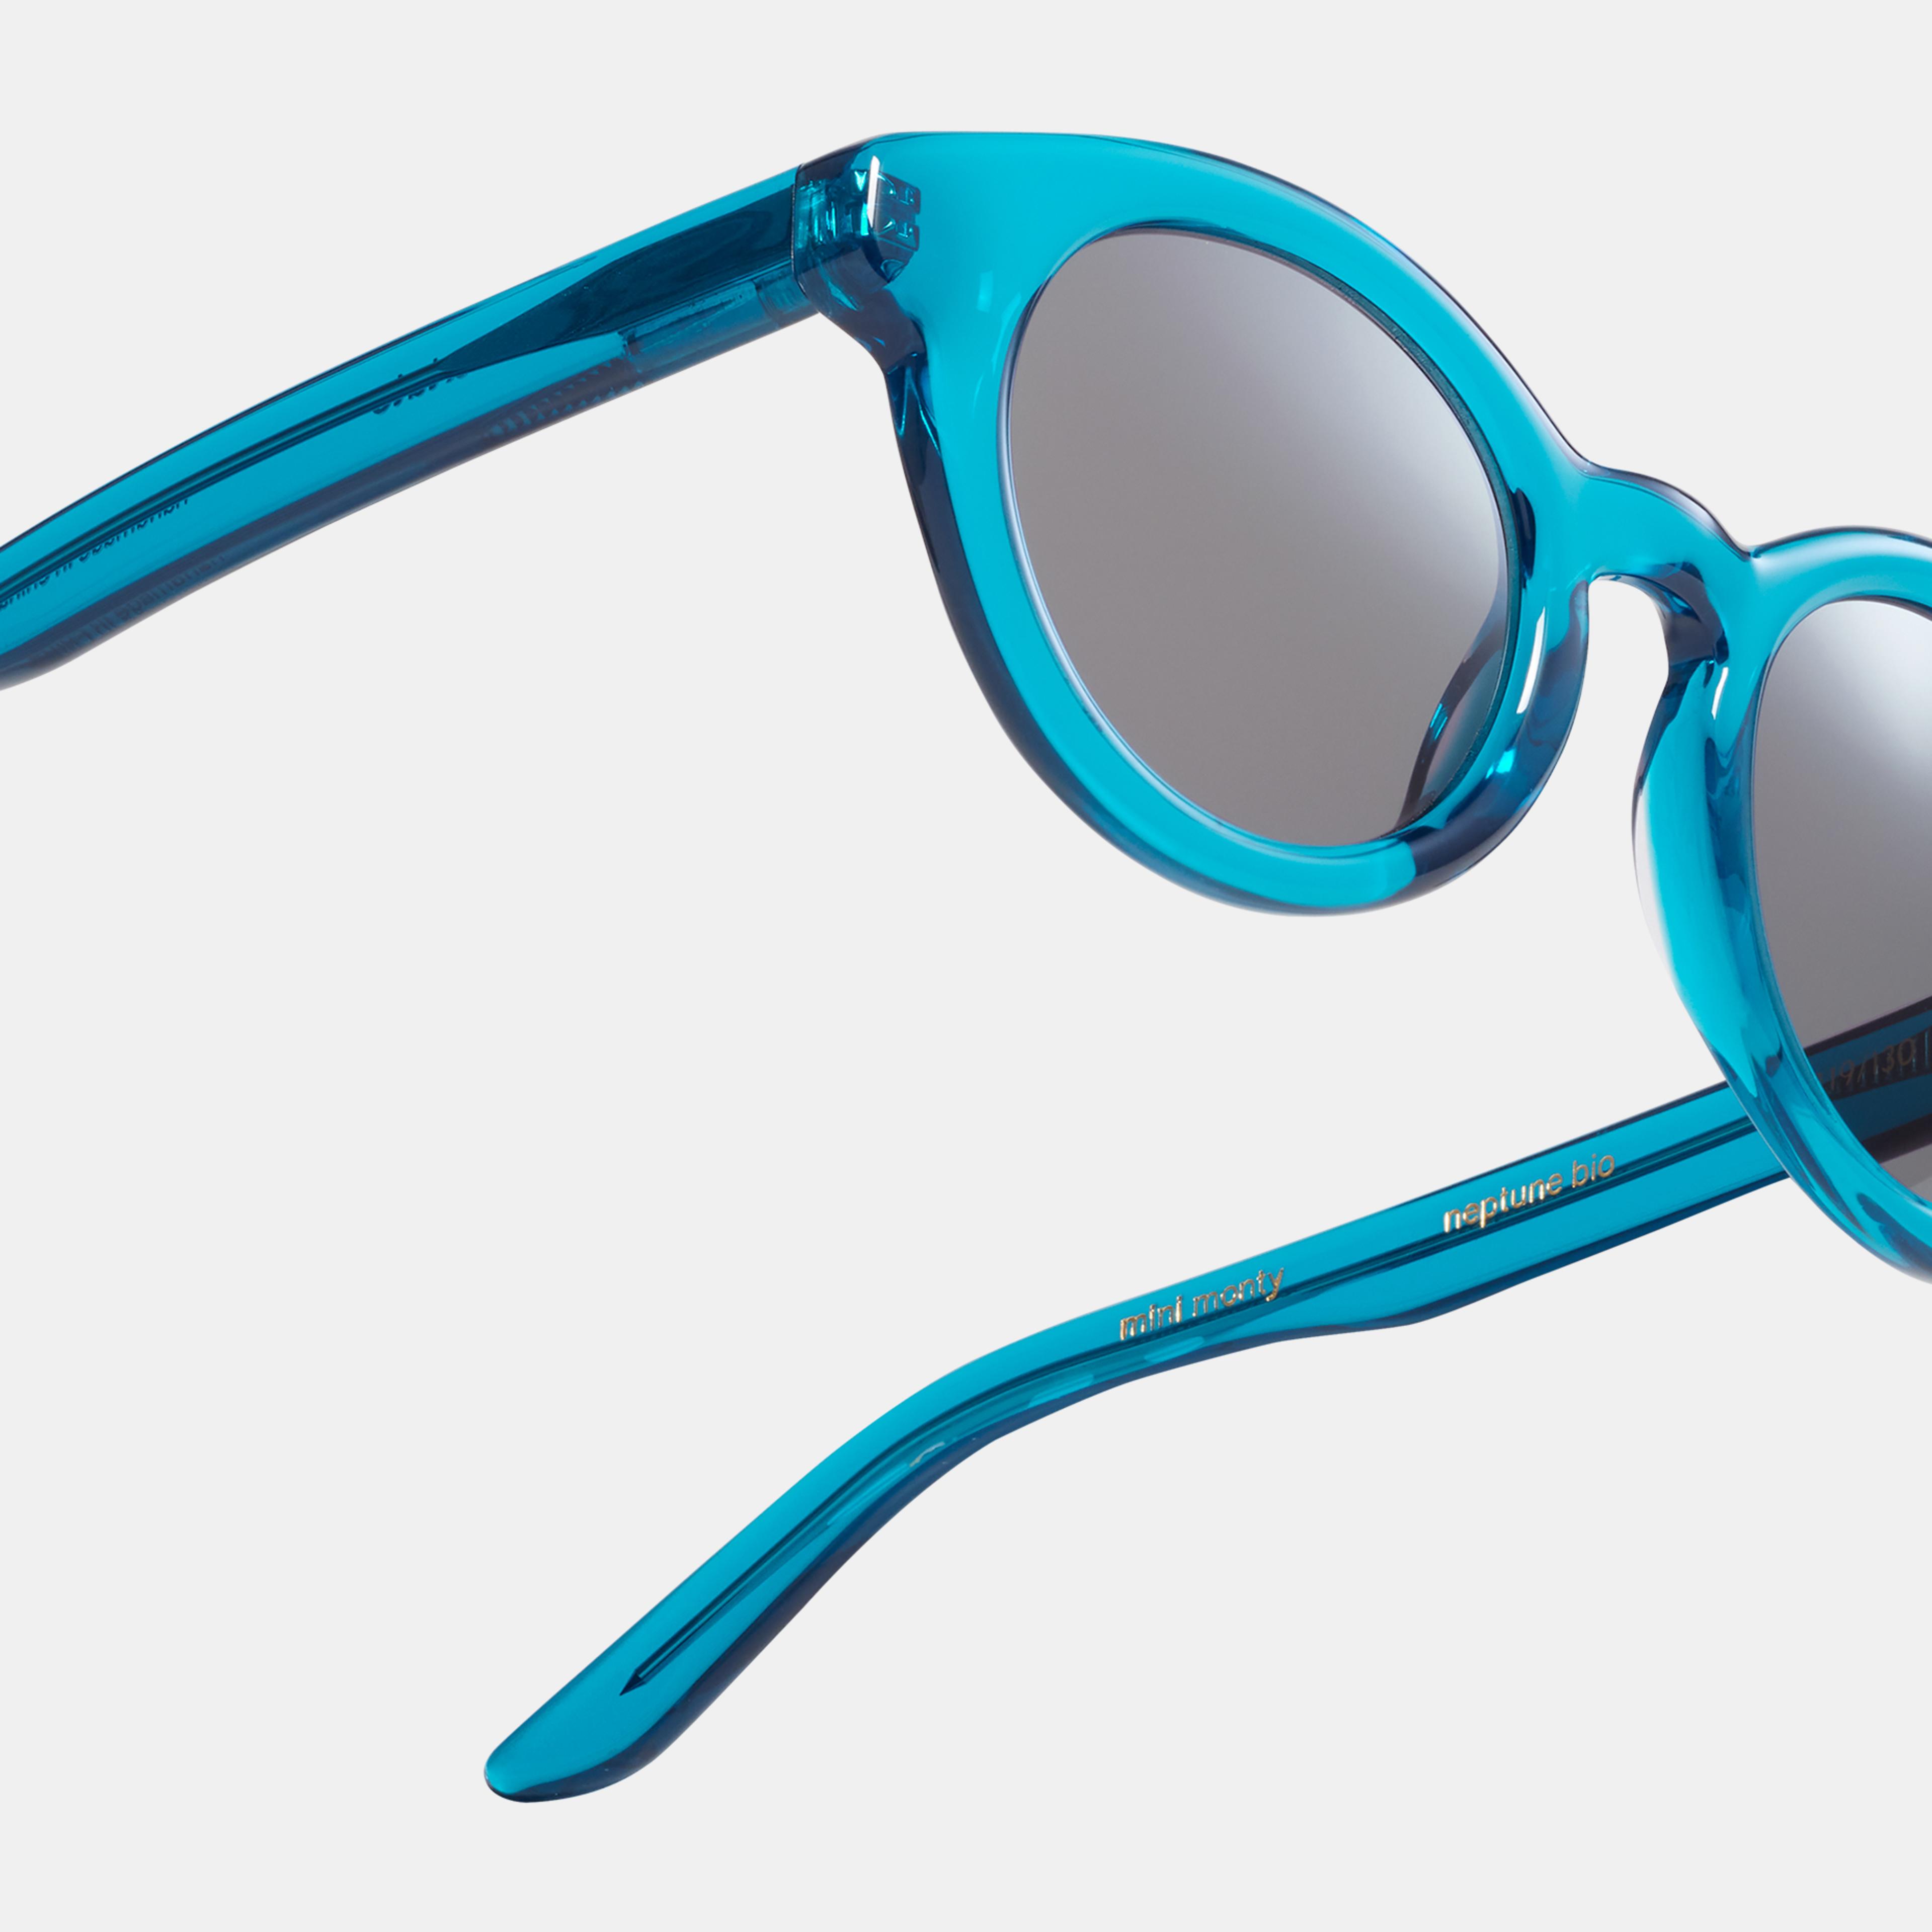 Ace & Tate Sunglasses | Round Renew bio acetate in Blue